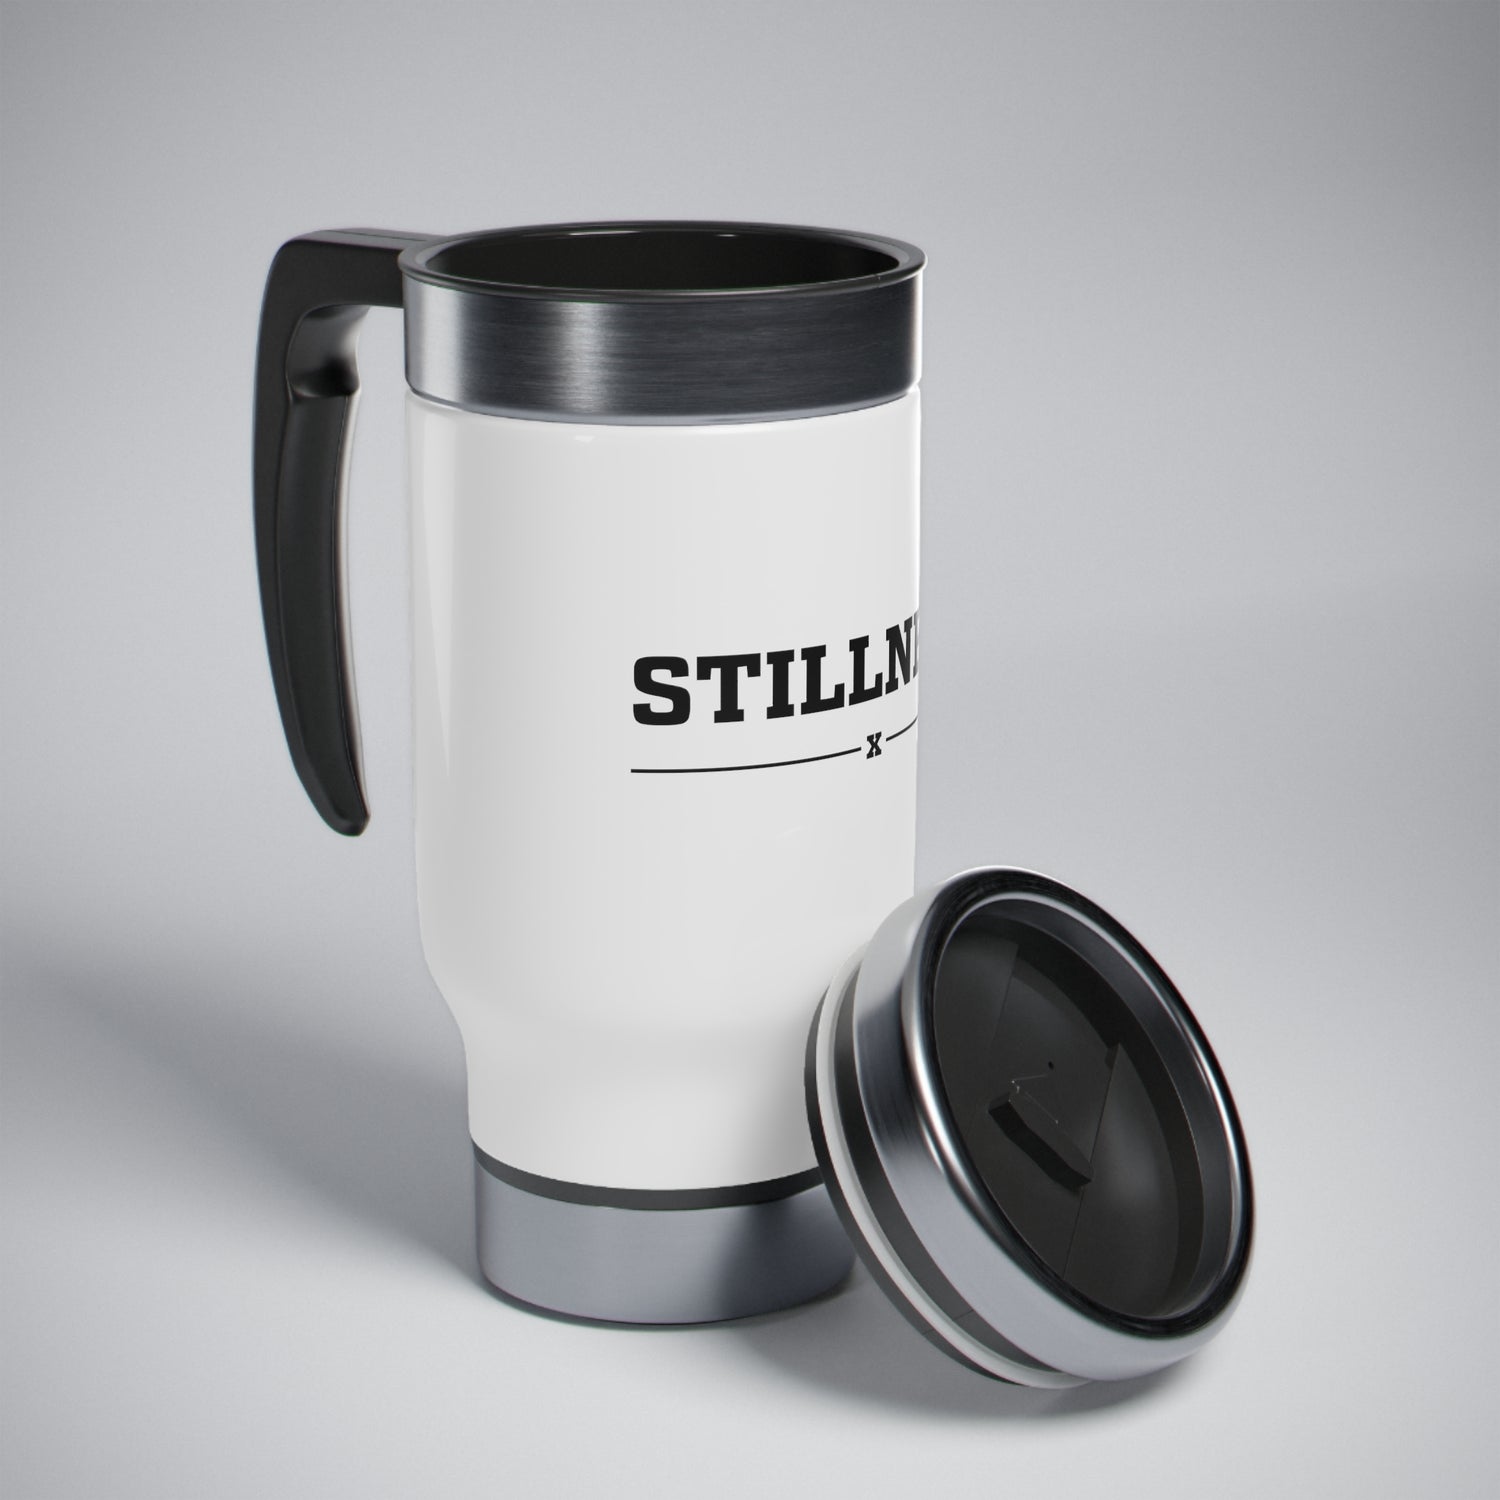 Stillness Travel Mug 14oz